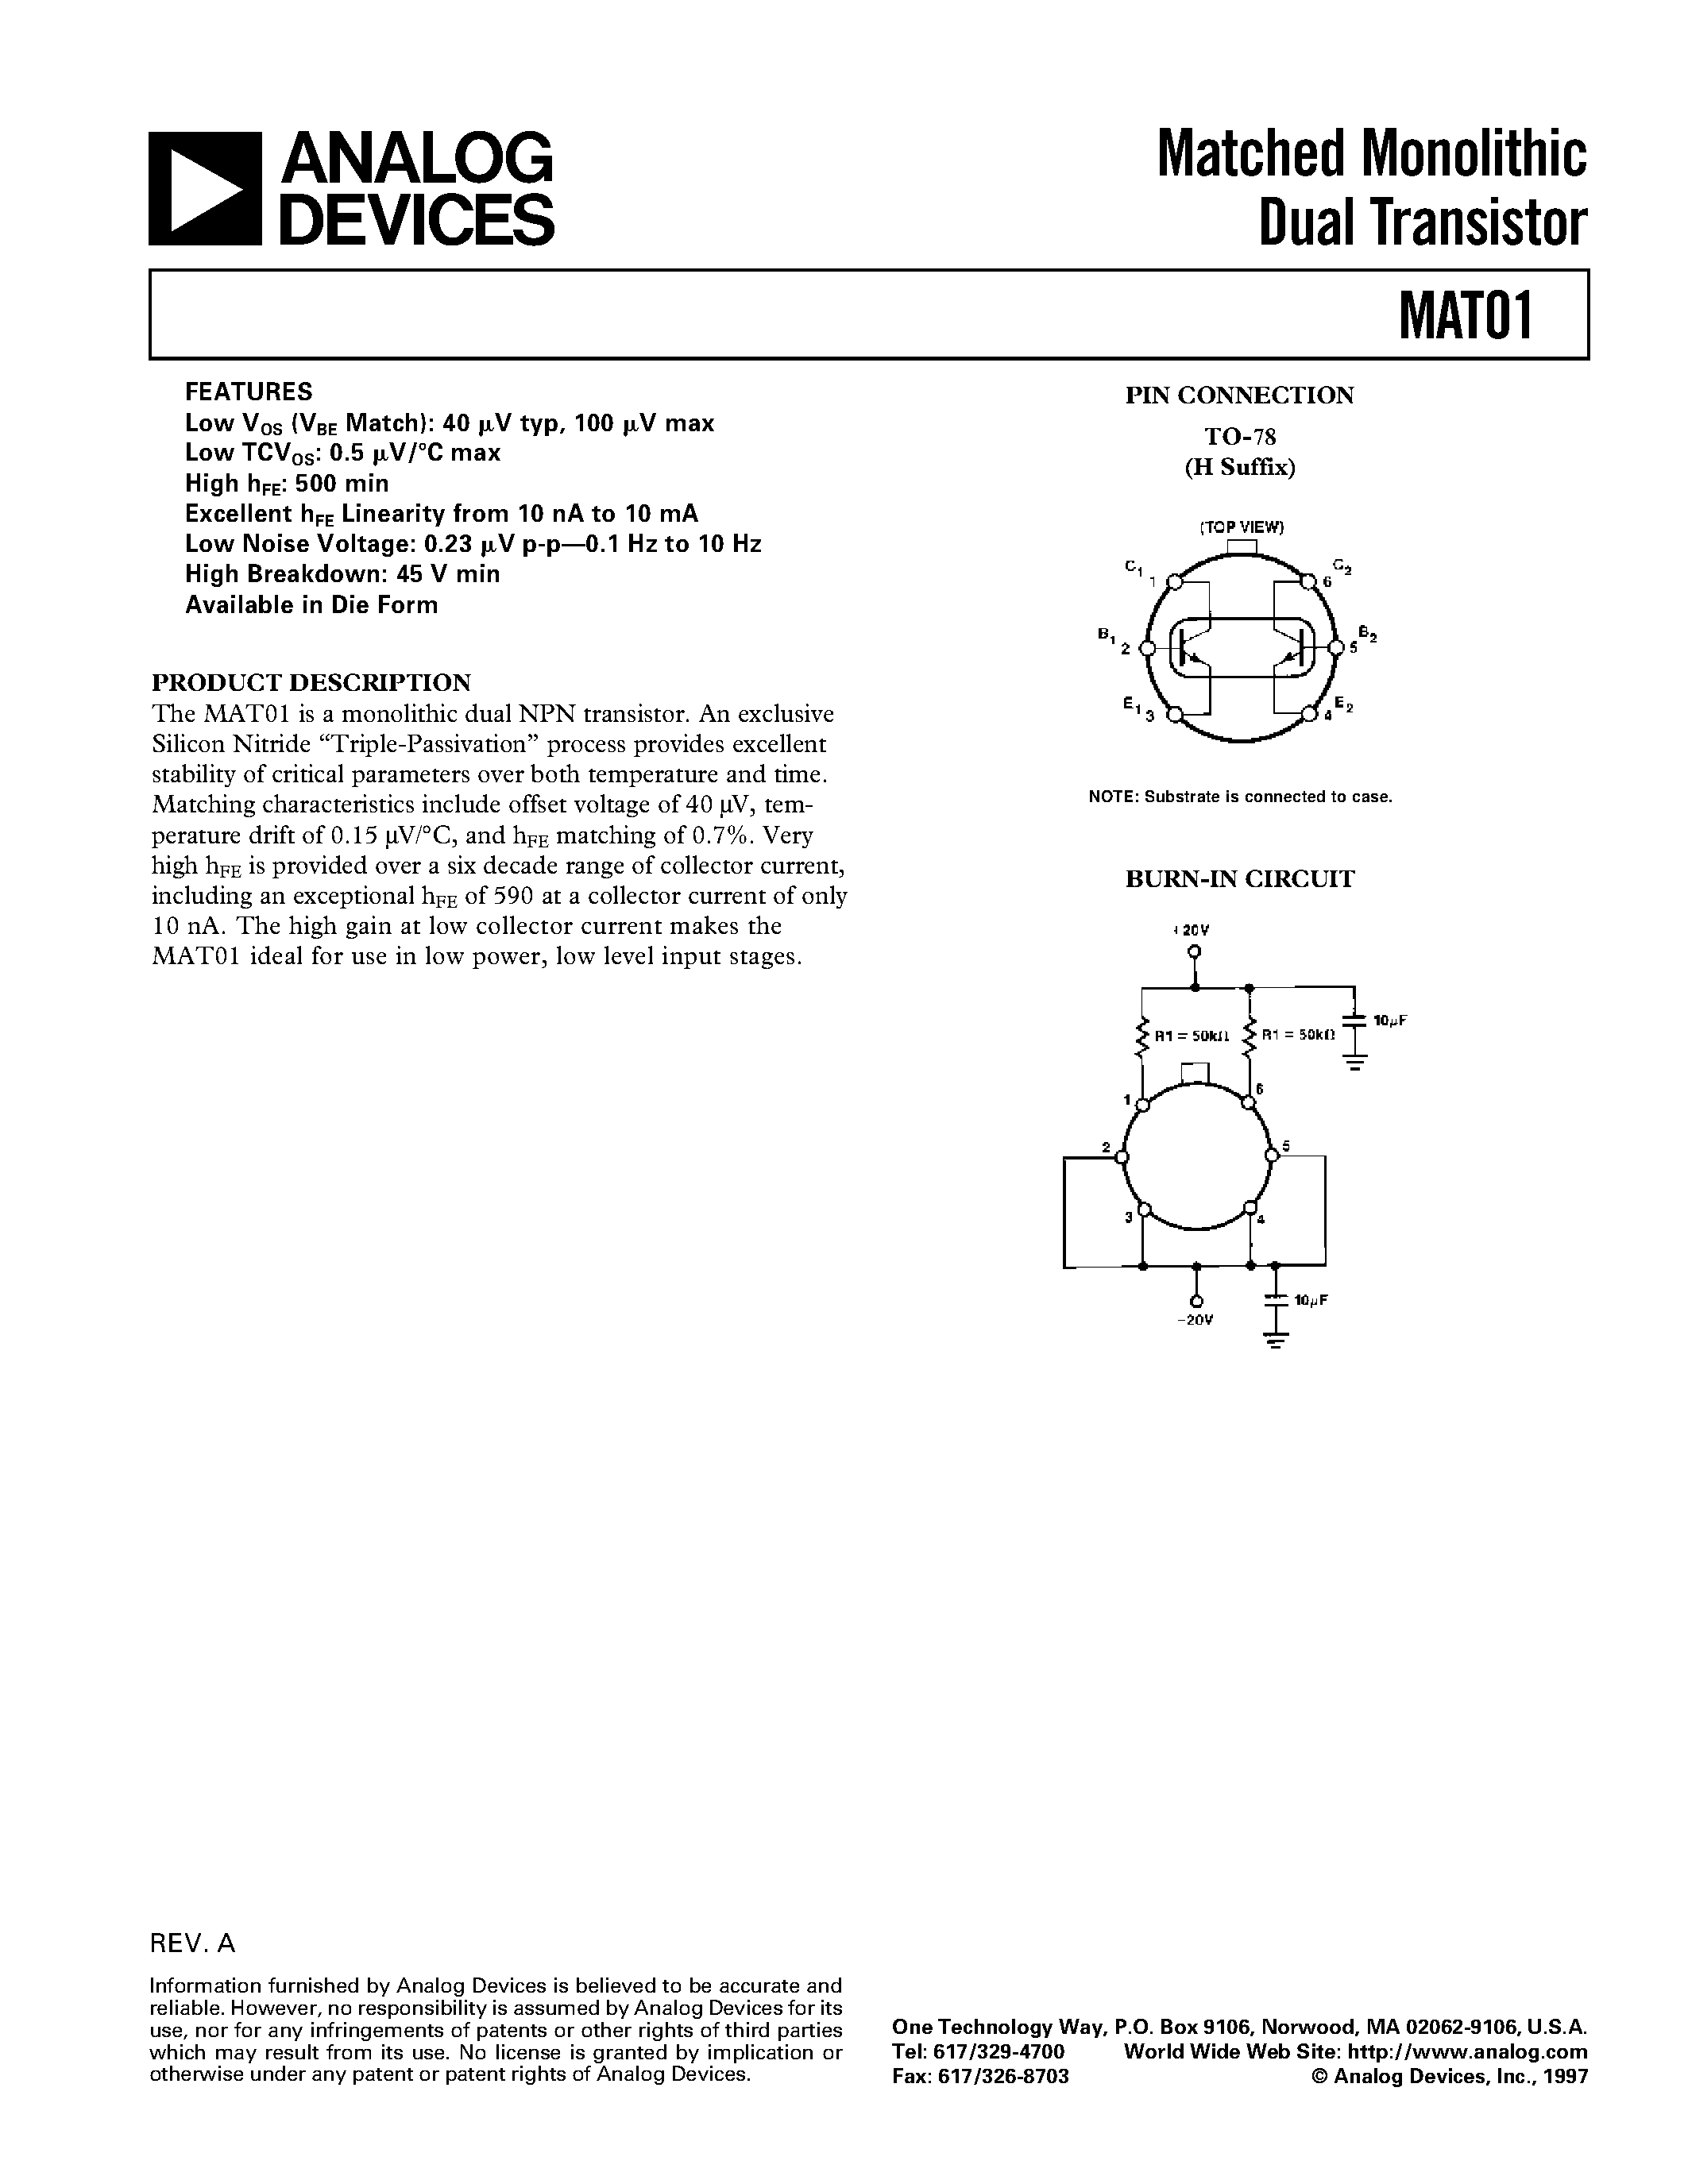 Даташит MAT01 - Matched Monolithic Dual Transistor страница 1